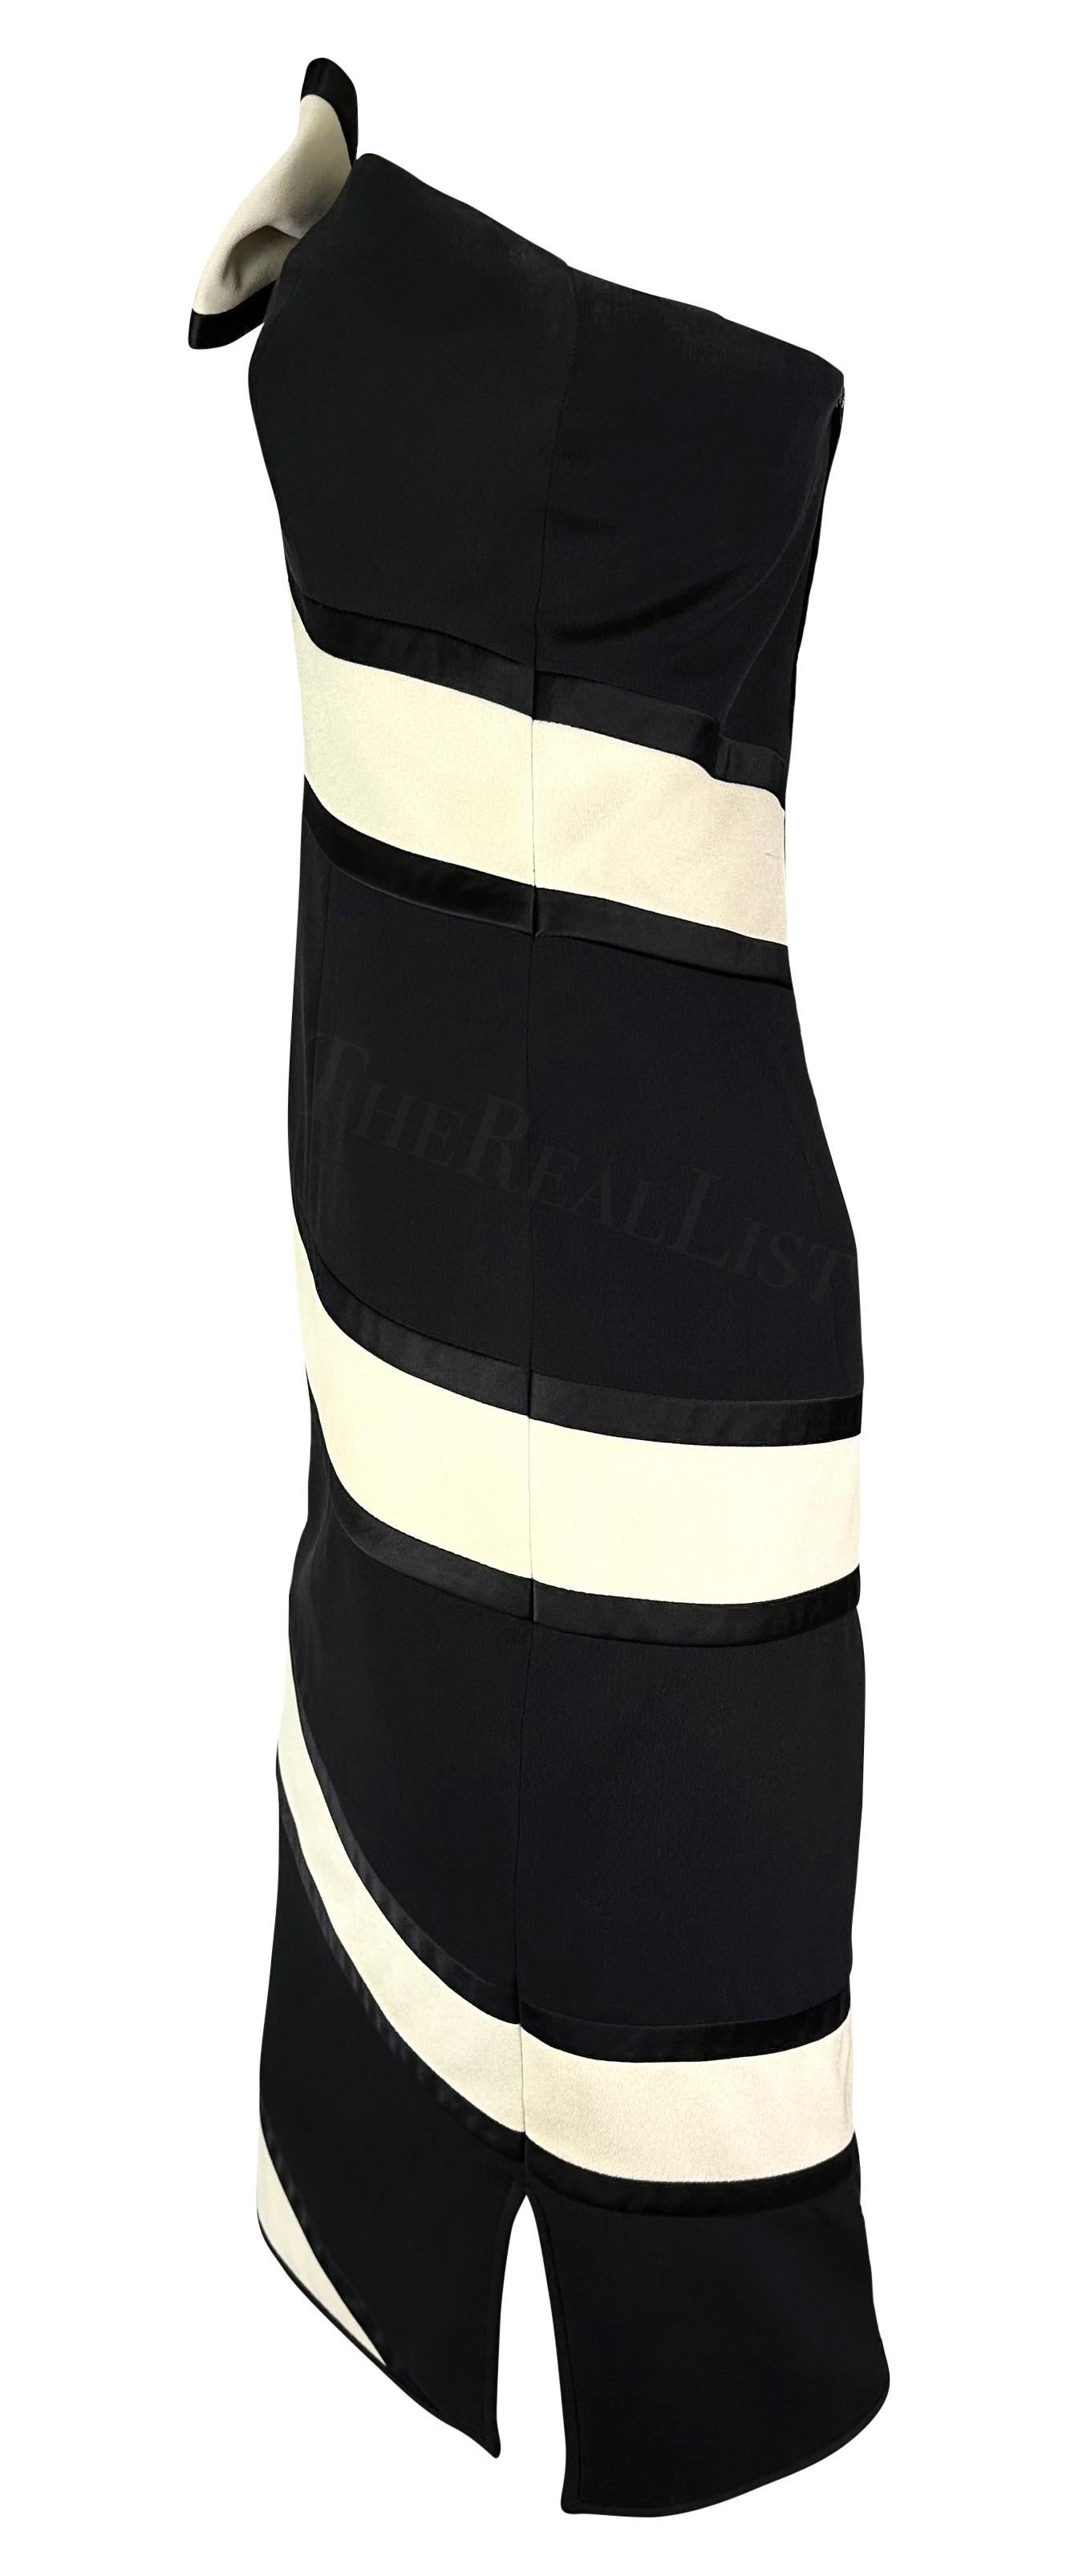 Women's S/S 1993 Valentino Garavani Runway Black White Stripe Bow Dress For Sale